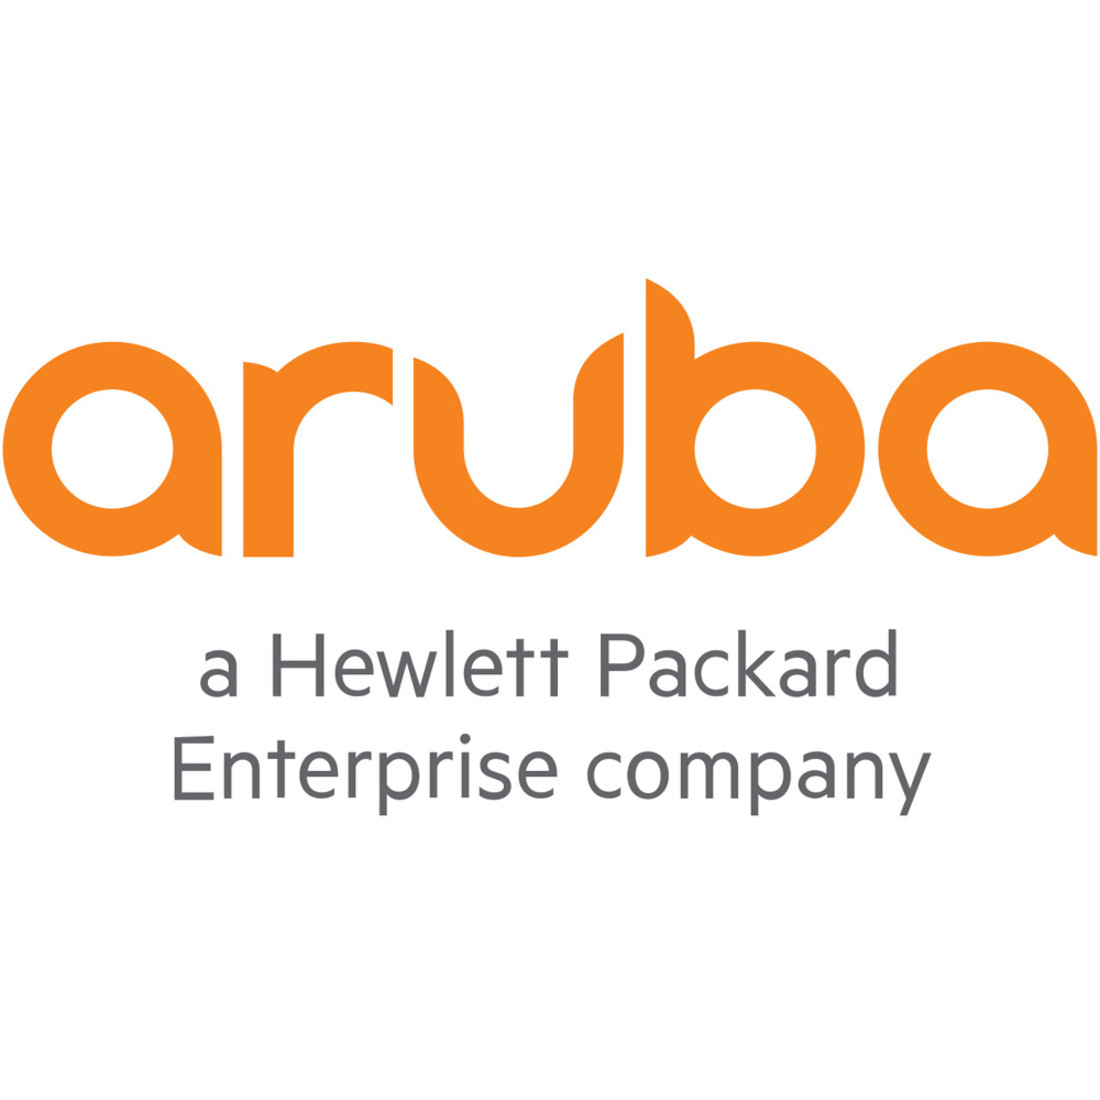 Aruba Foundation Care Post Warranty Warranty9 x 5 Next Business DayOn-siteMaintenanceParts & Labor HR1P3PE